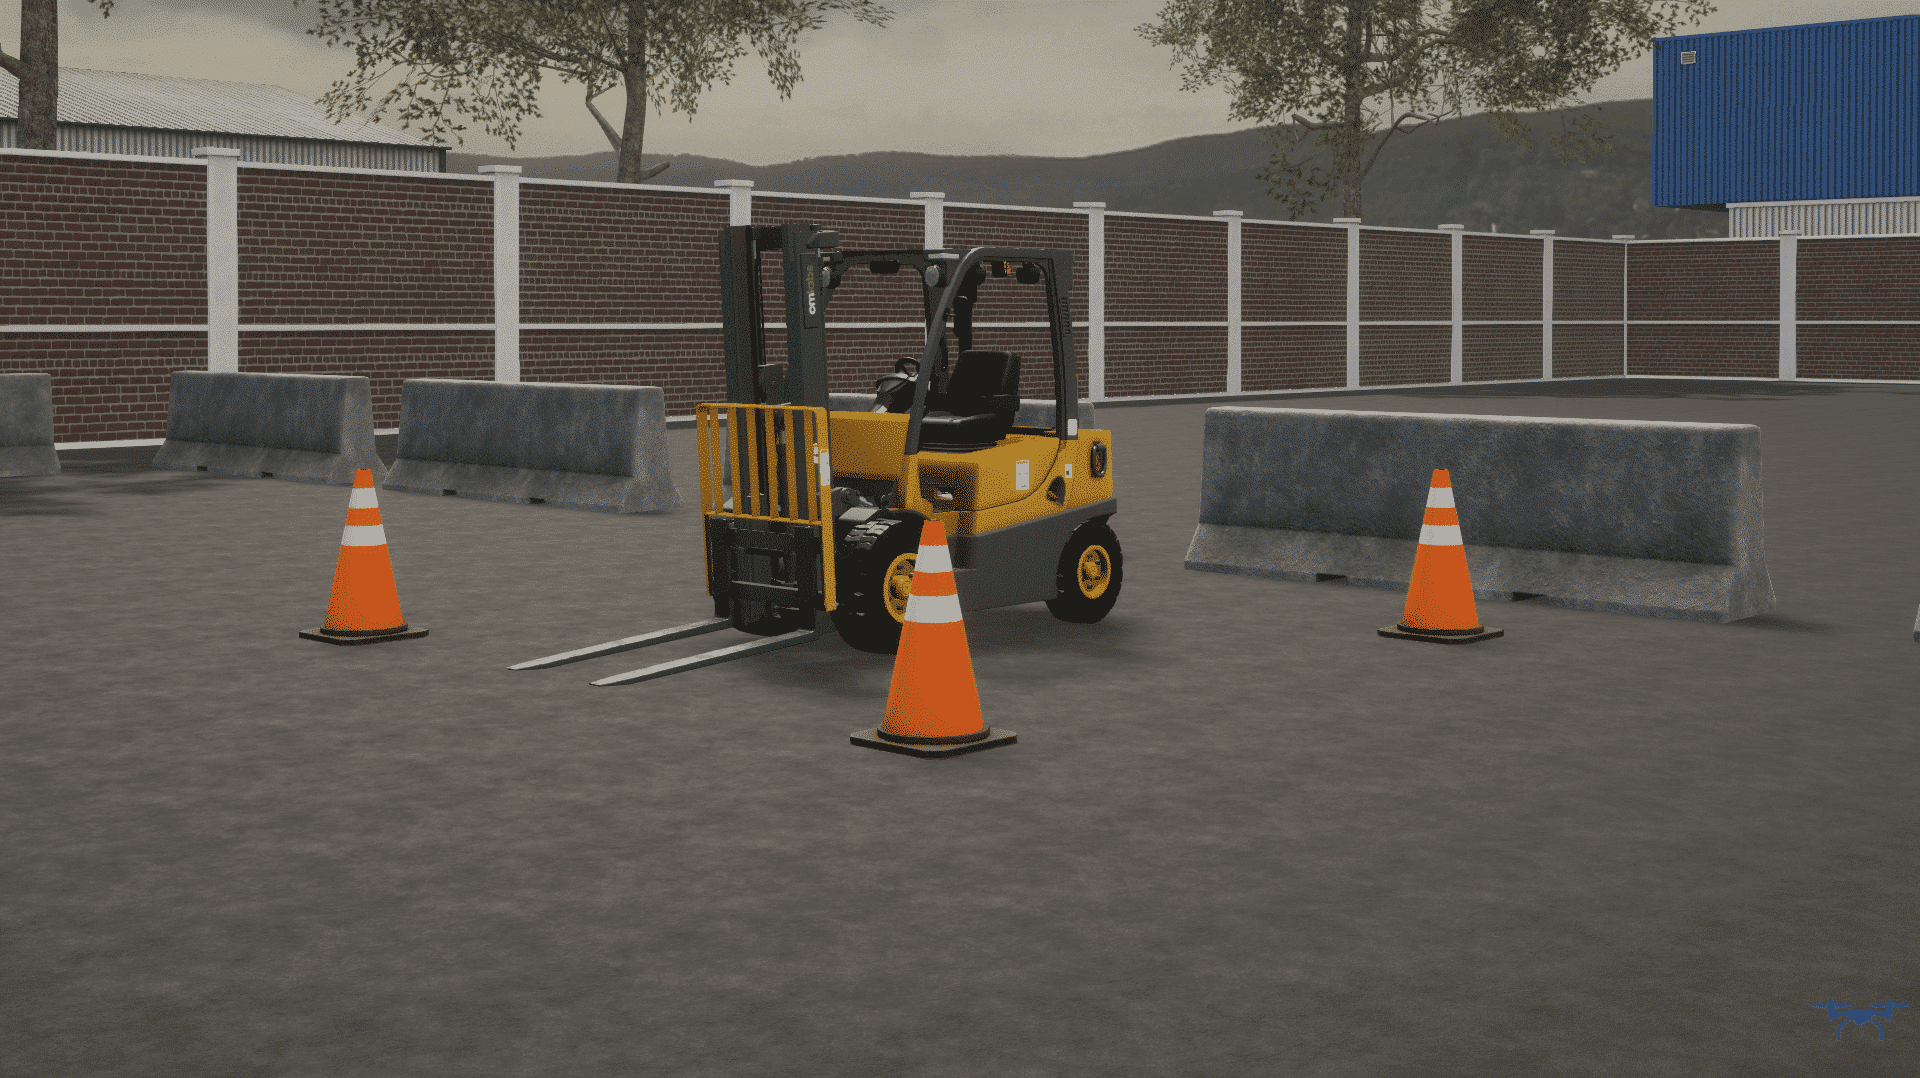 Enhanced CM Labs Forklift Simulator for Ports & Construction